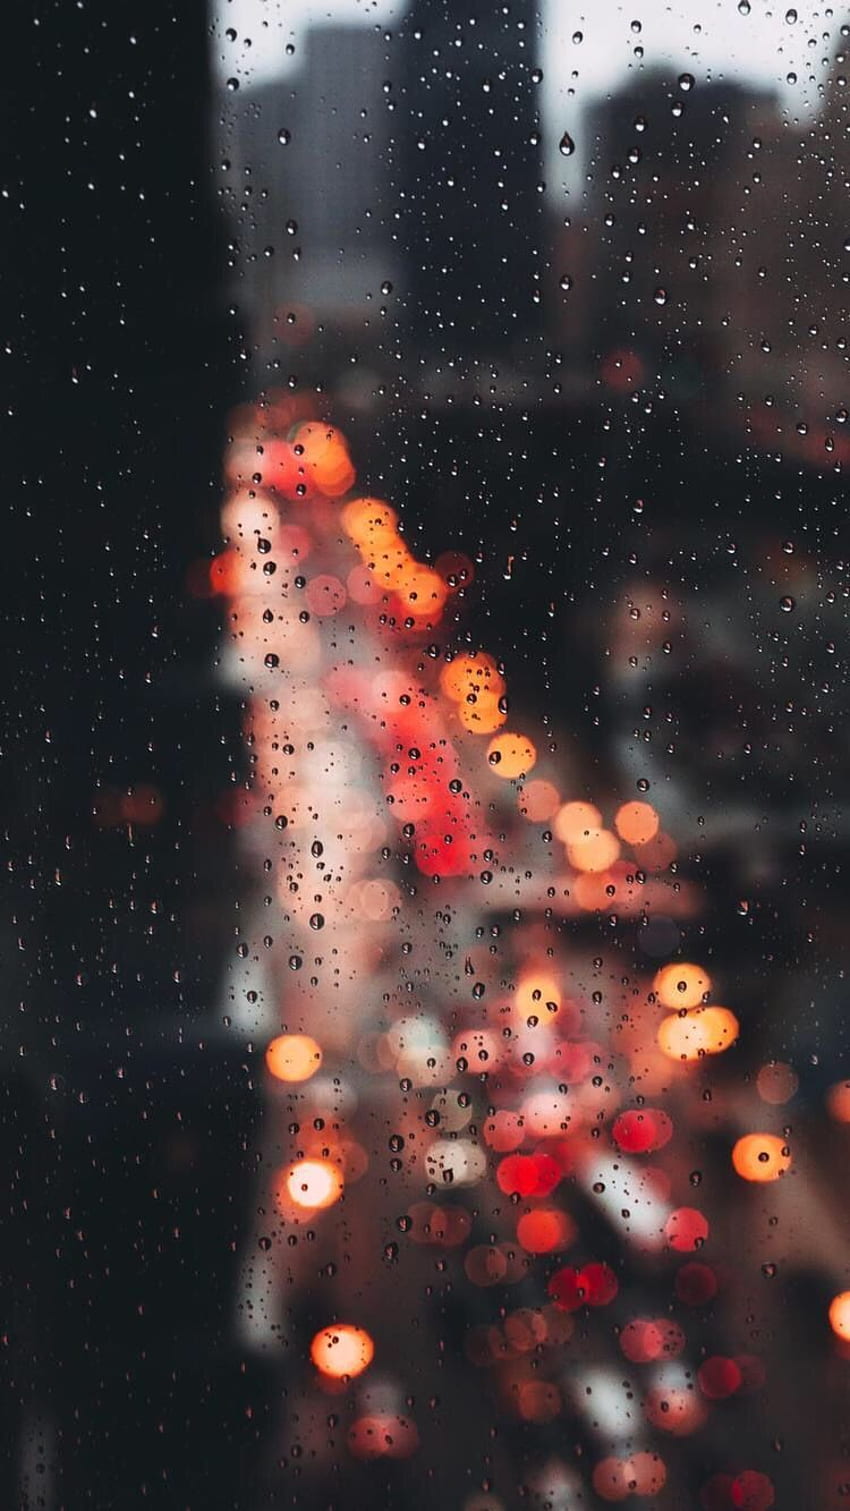 IPhone de gotas de lluvia de Nueva York. iPhone. IPhone, Nueva York lluviosa fondo de pantalla del teléfono